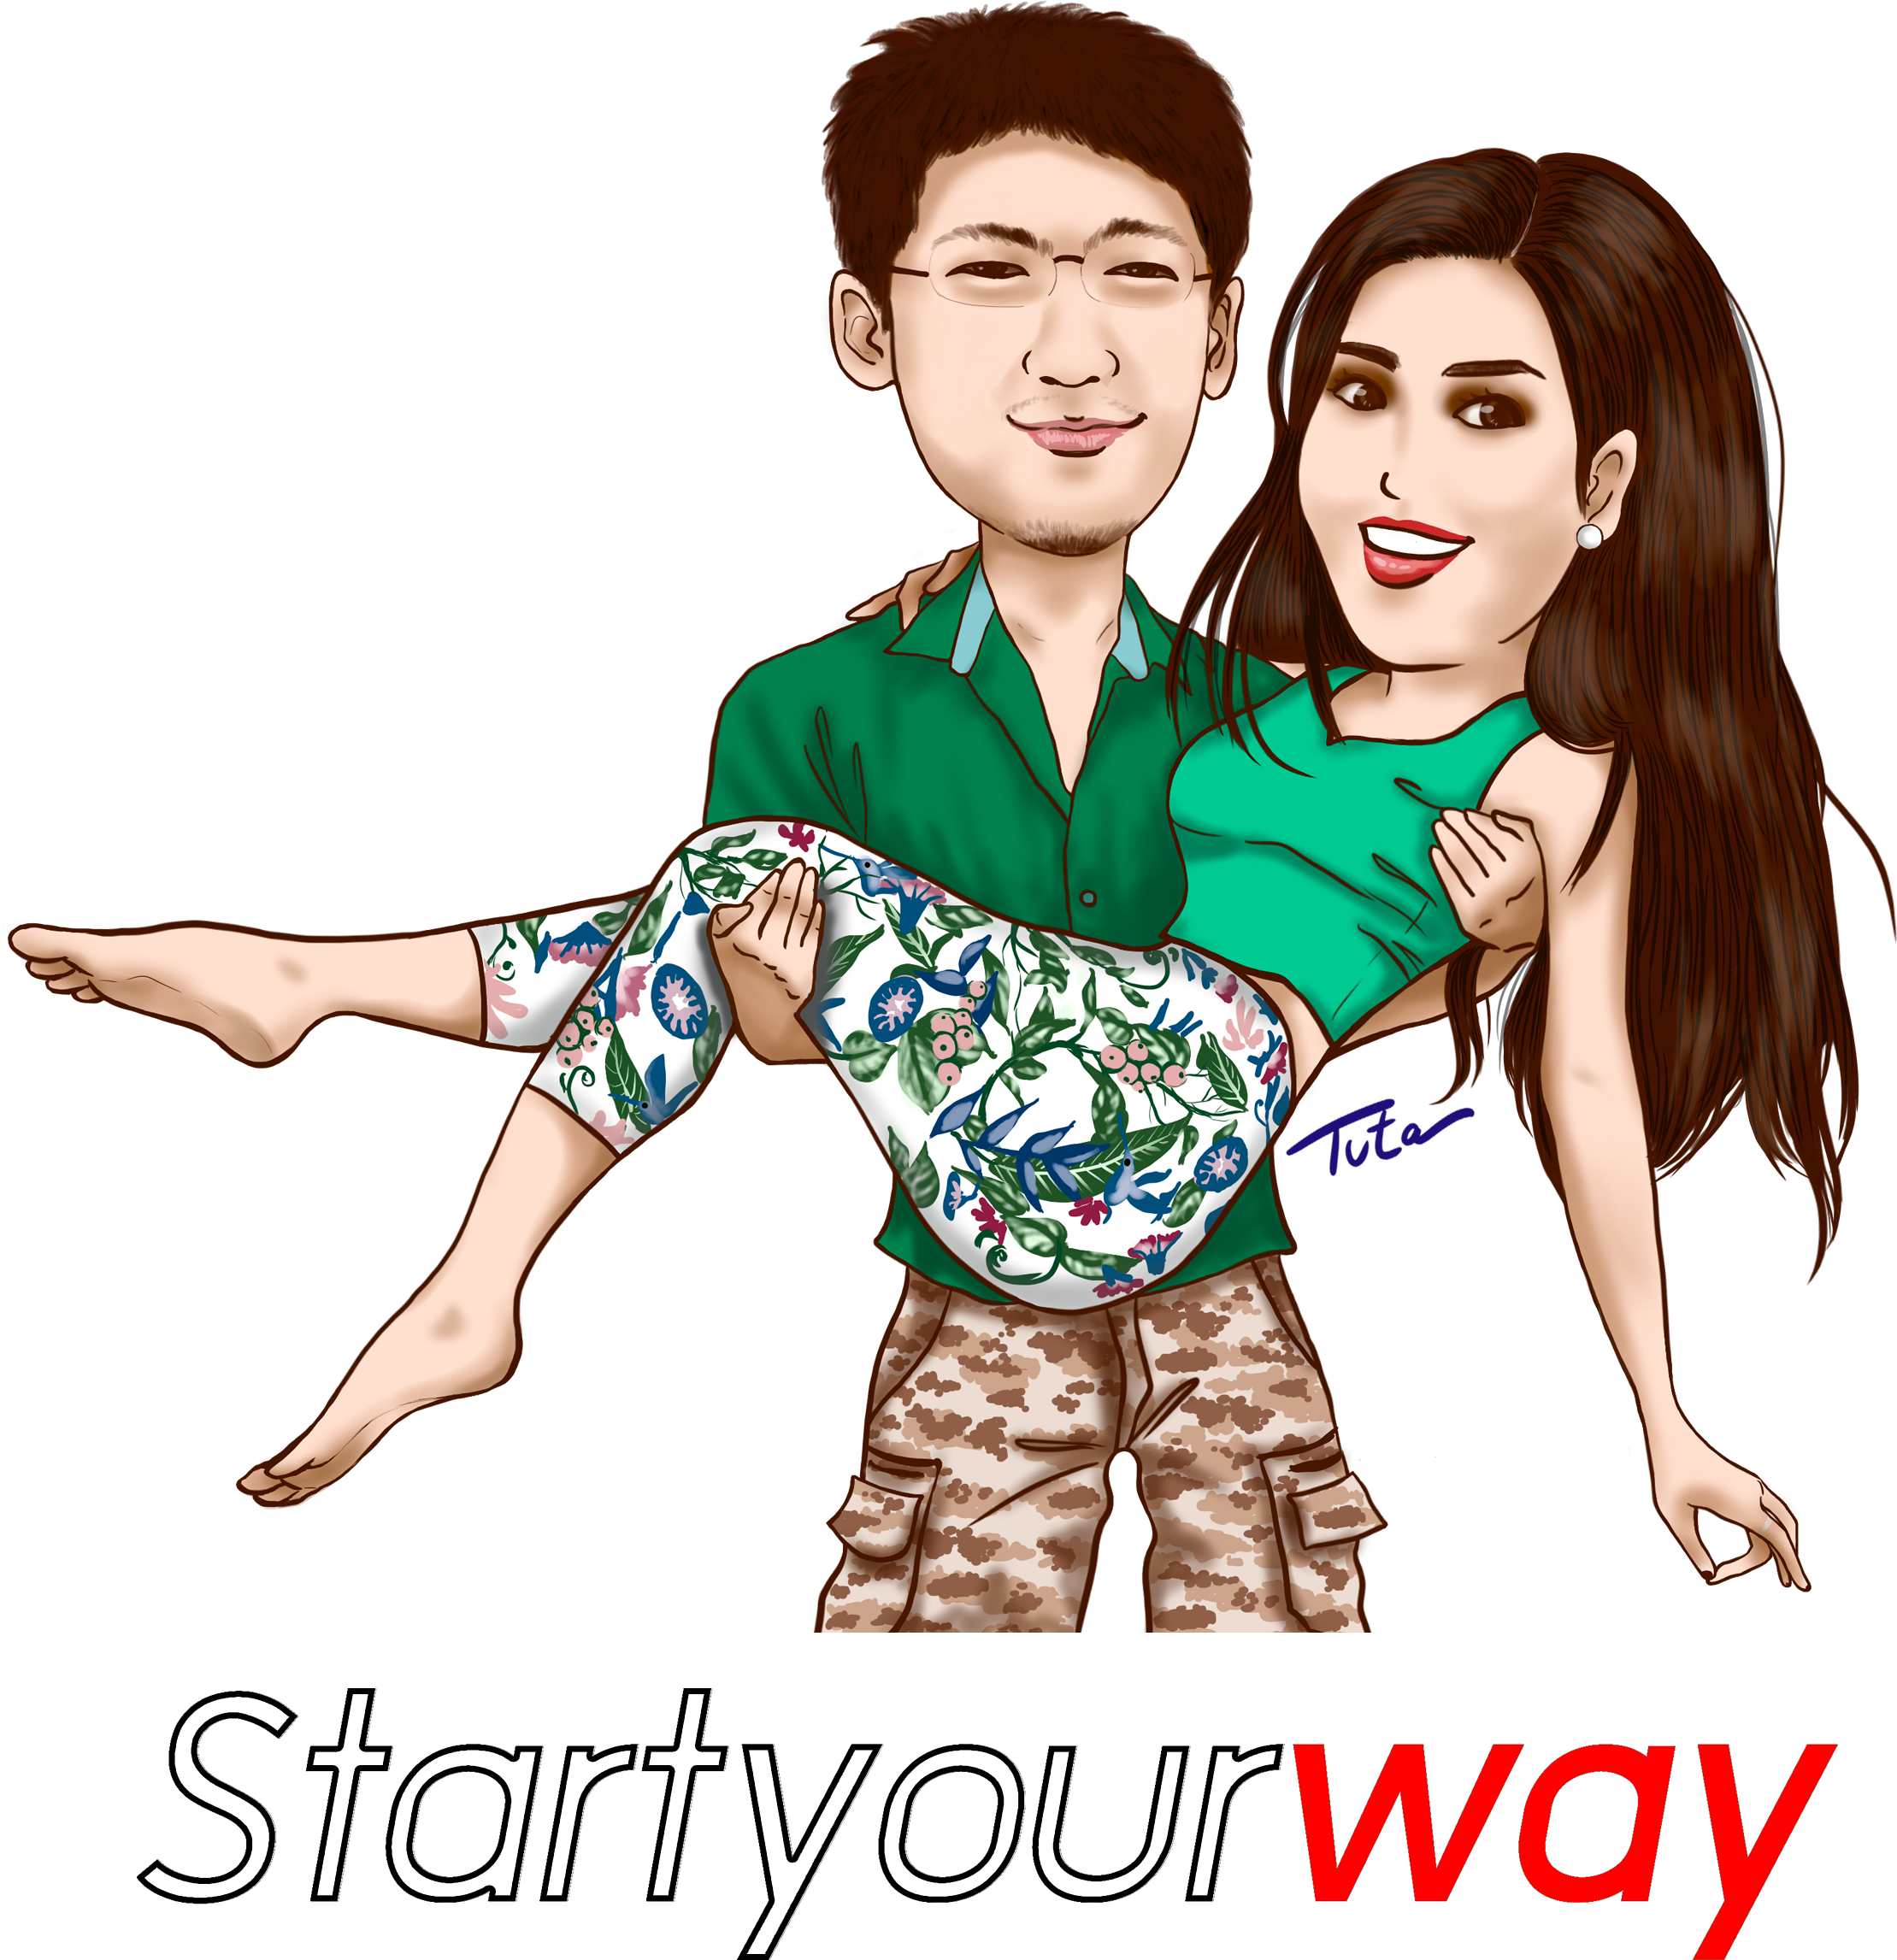 Startyourway couple